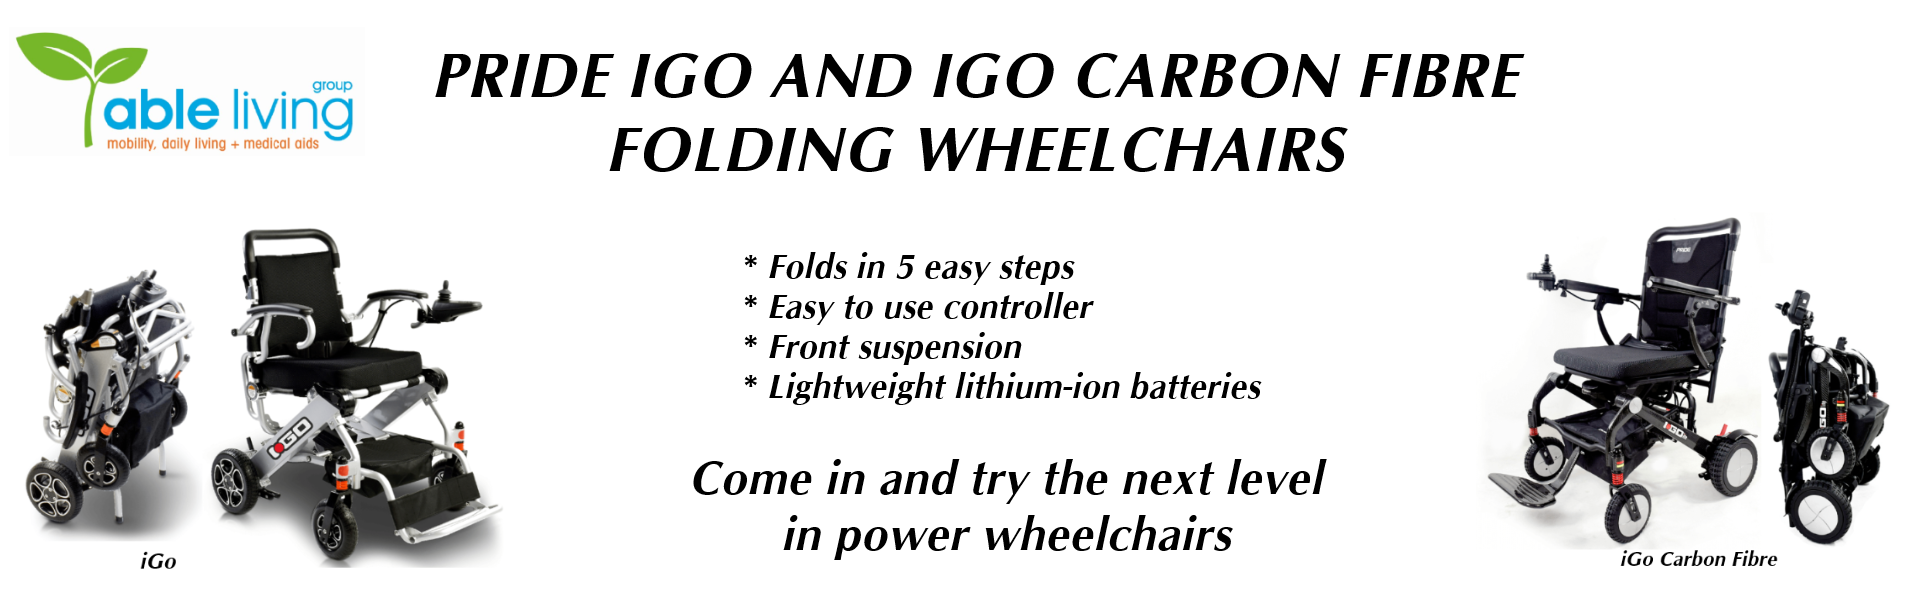 igo Folding Wheelchairs